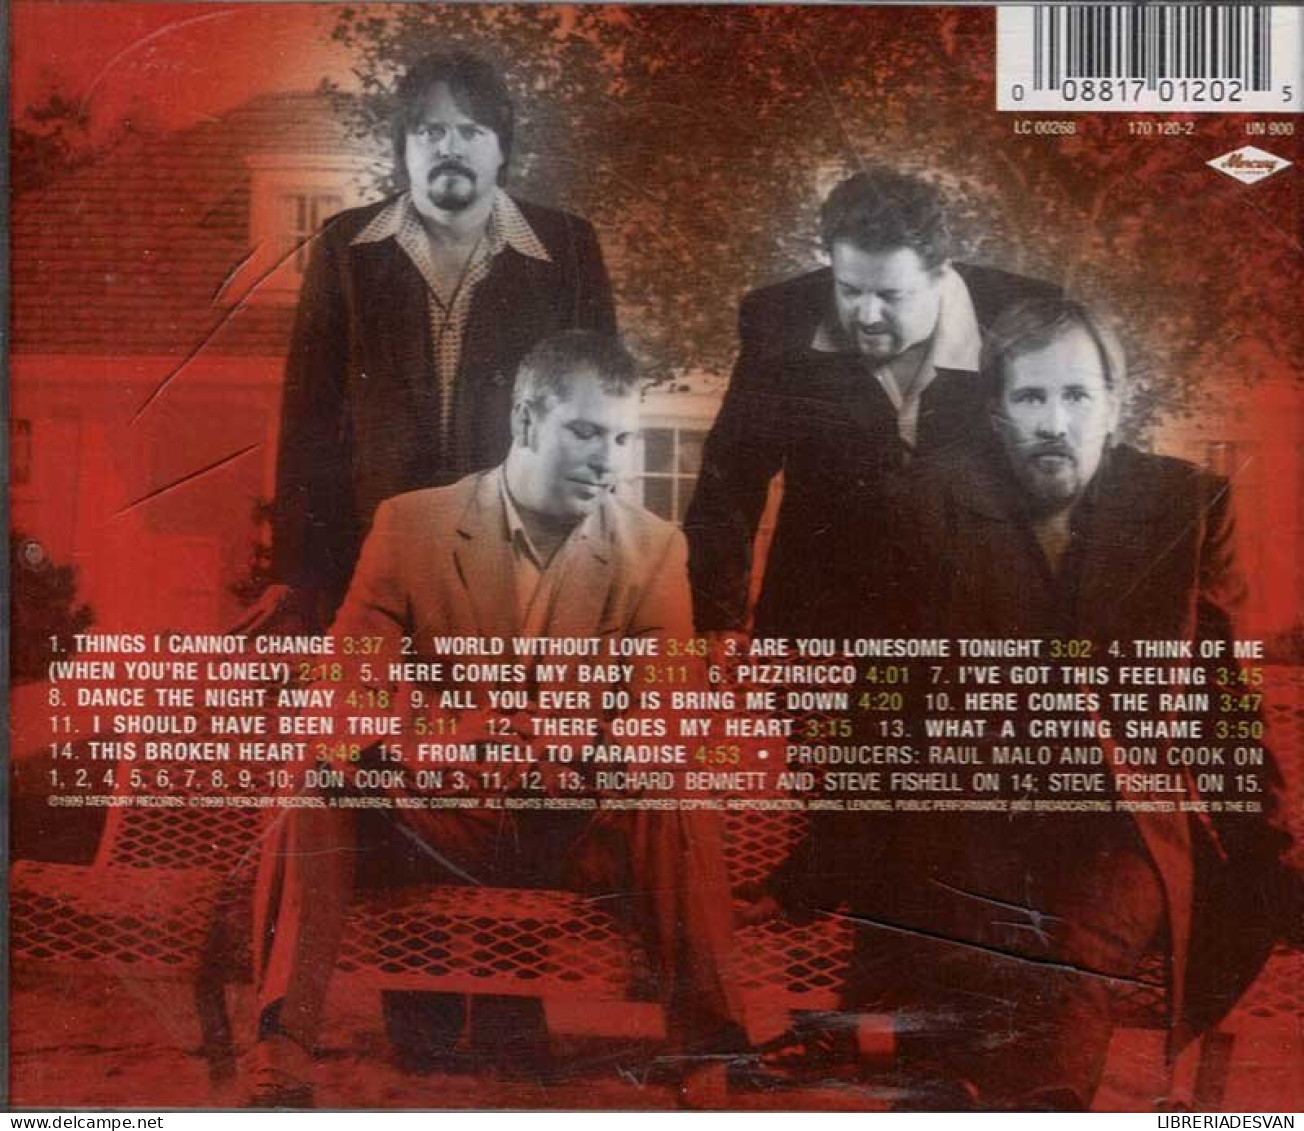 The Mavericks - The Best Of. CD - Country & Folk